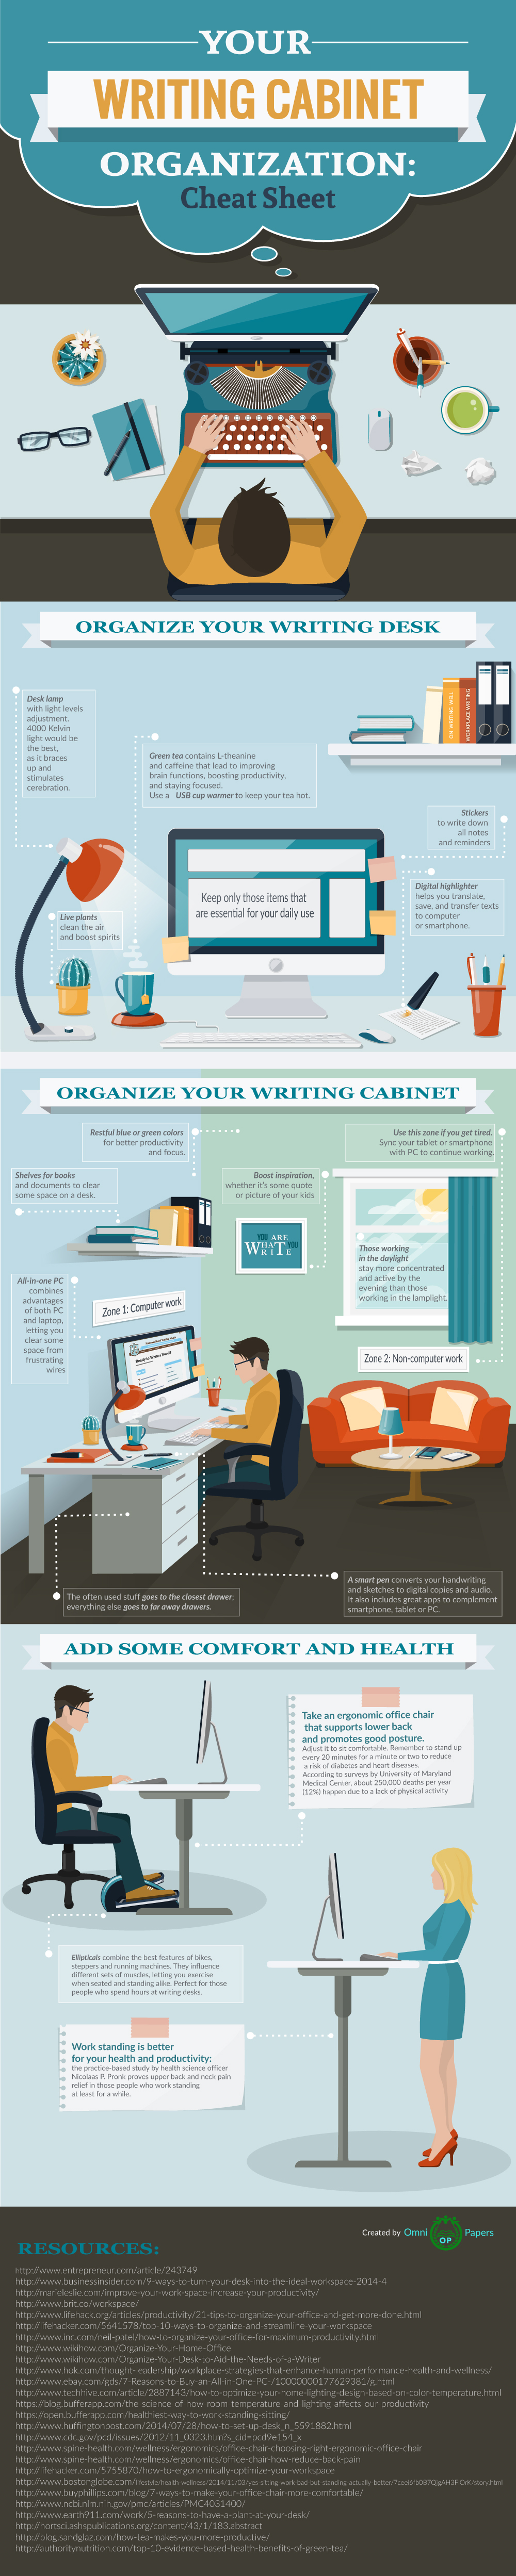 your-writing-cabinet-organization.jpg